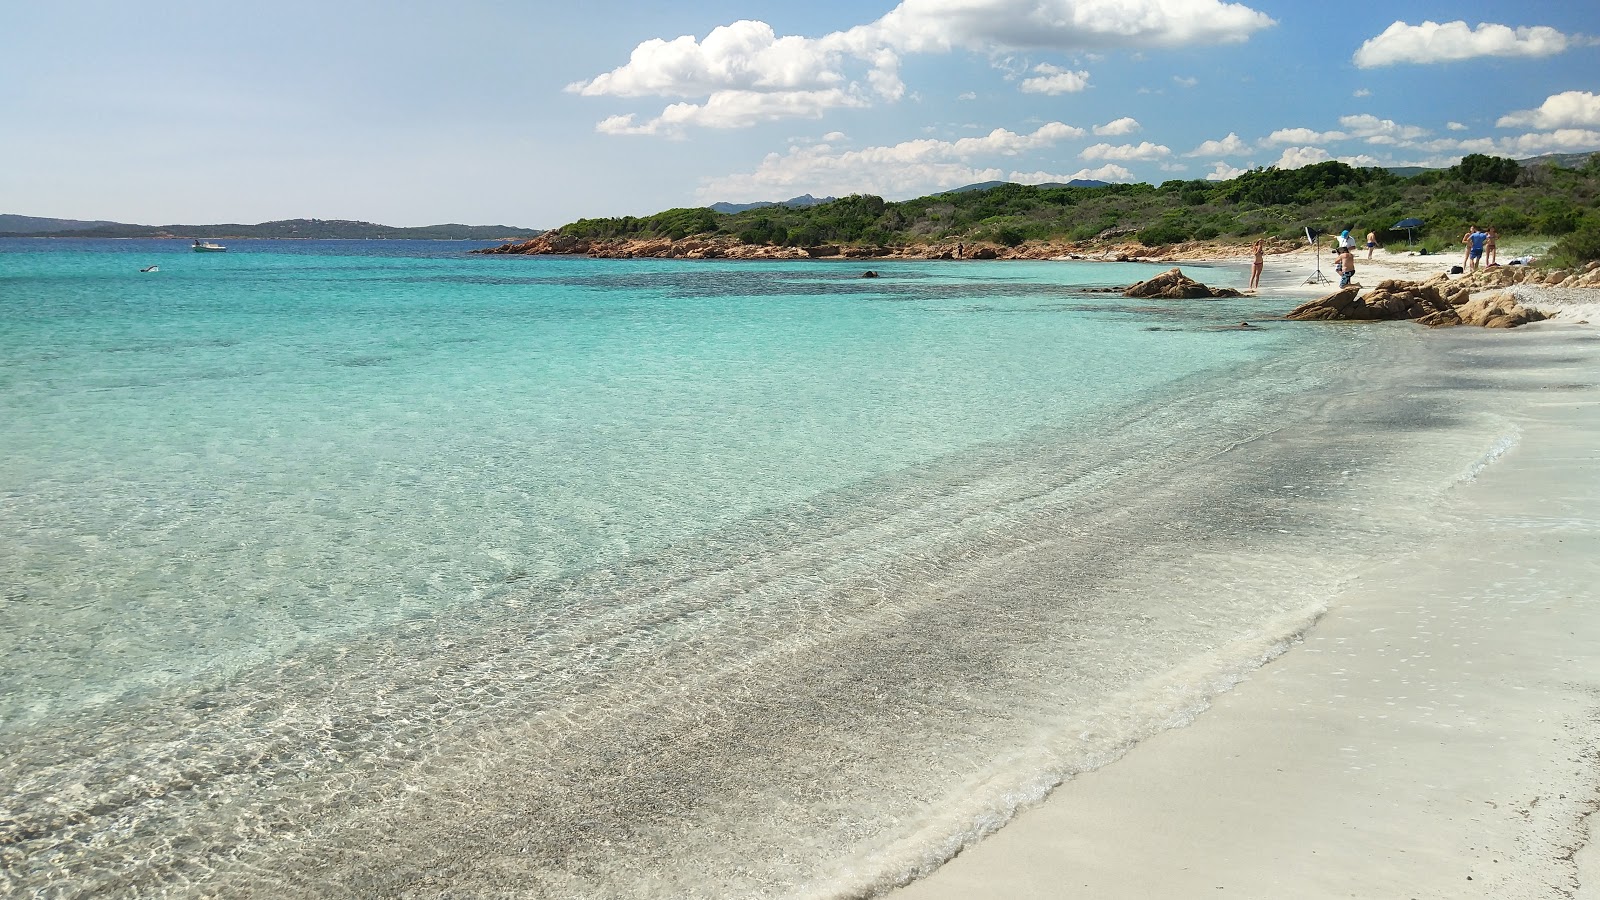 Photo of Spiaggia delle tre sorelle and its beautiful scenery